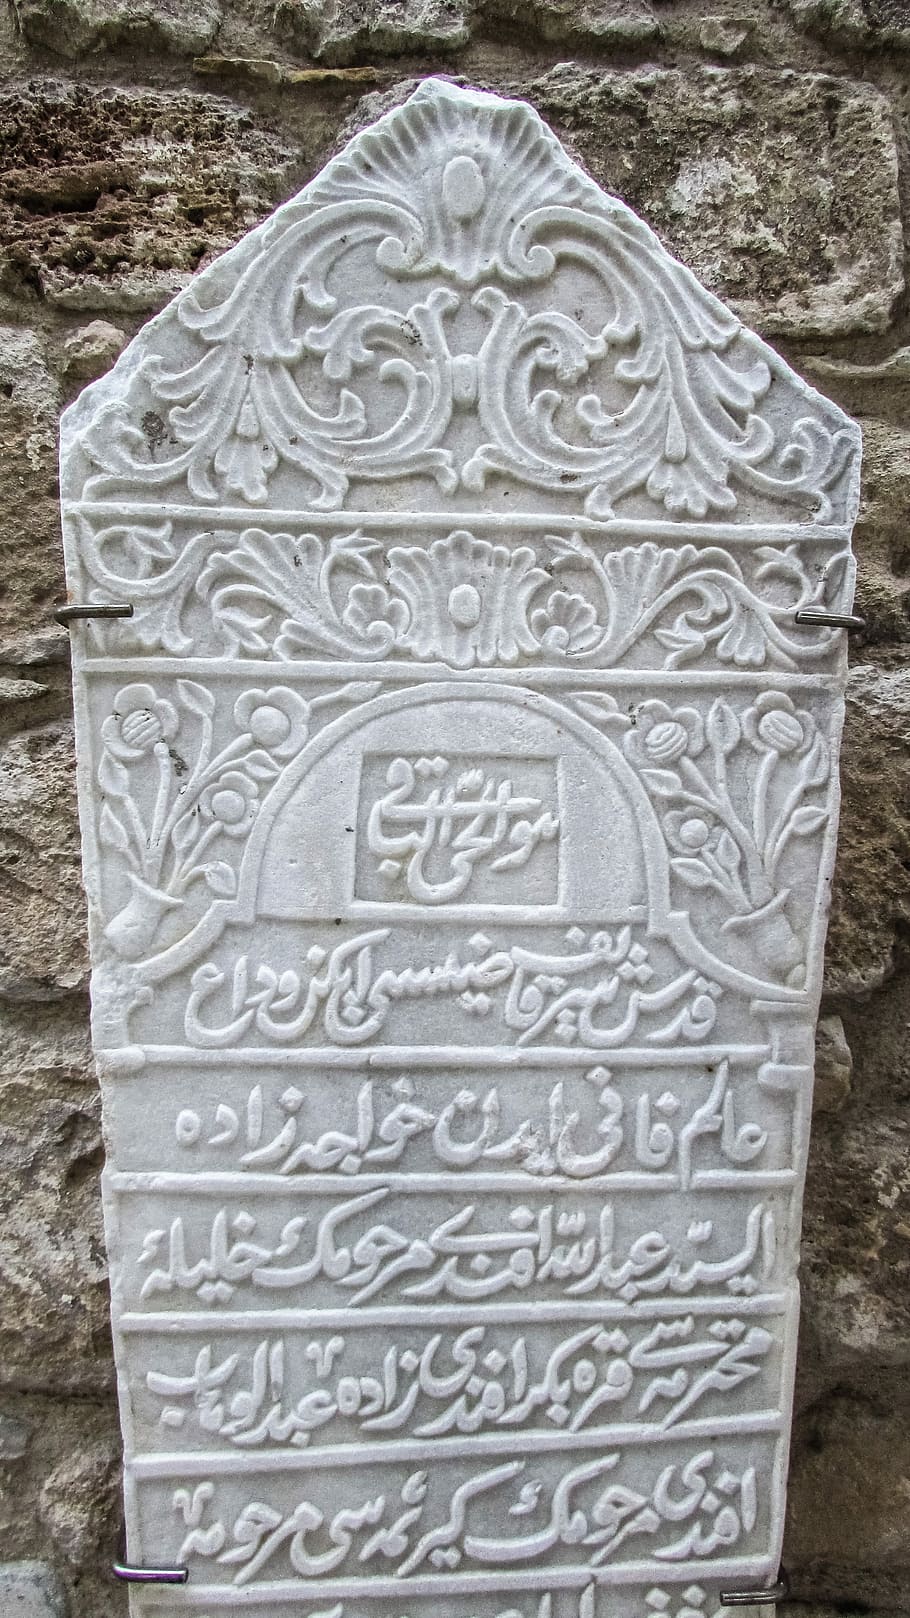 Cyprus, Larnaca, Fortress, Inscription, ottoman, arabic, calligraphy, stone, memorial, tombstone